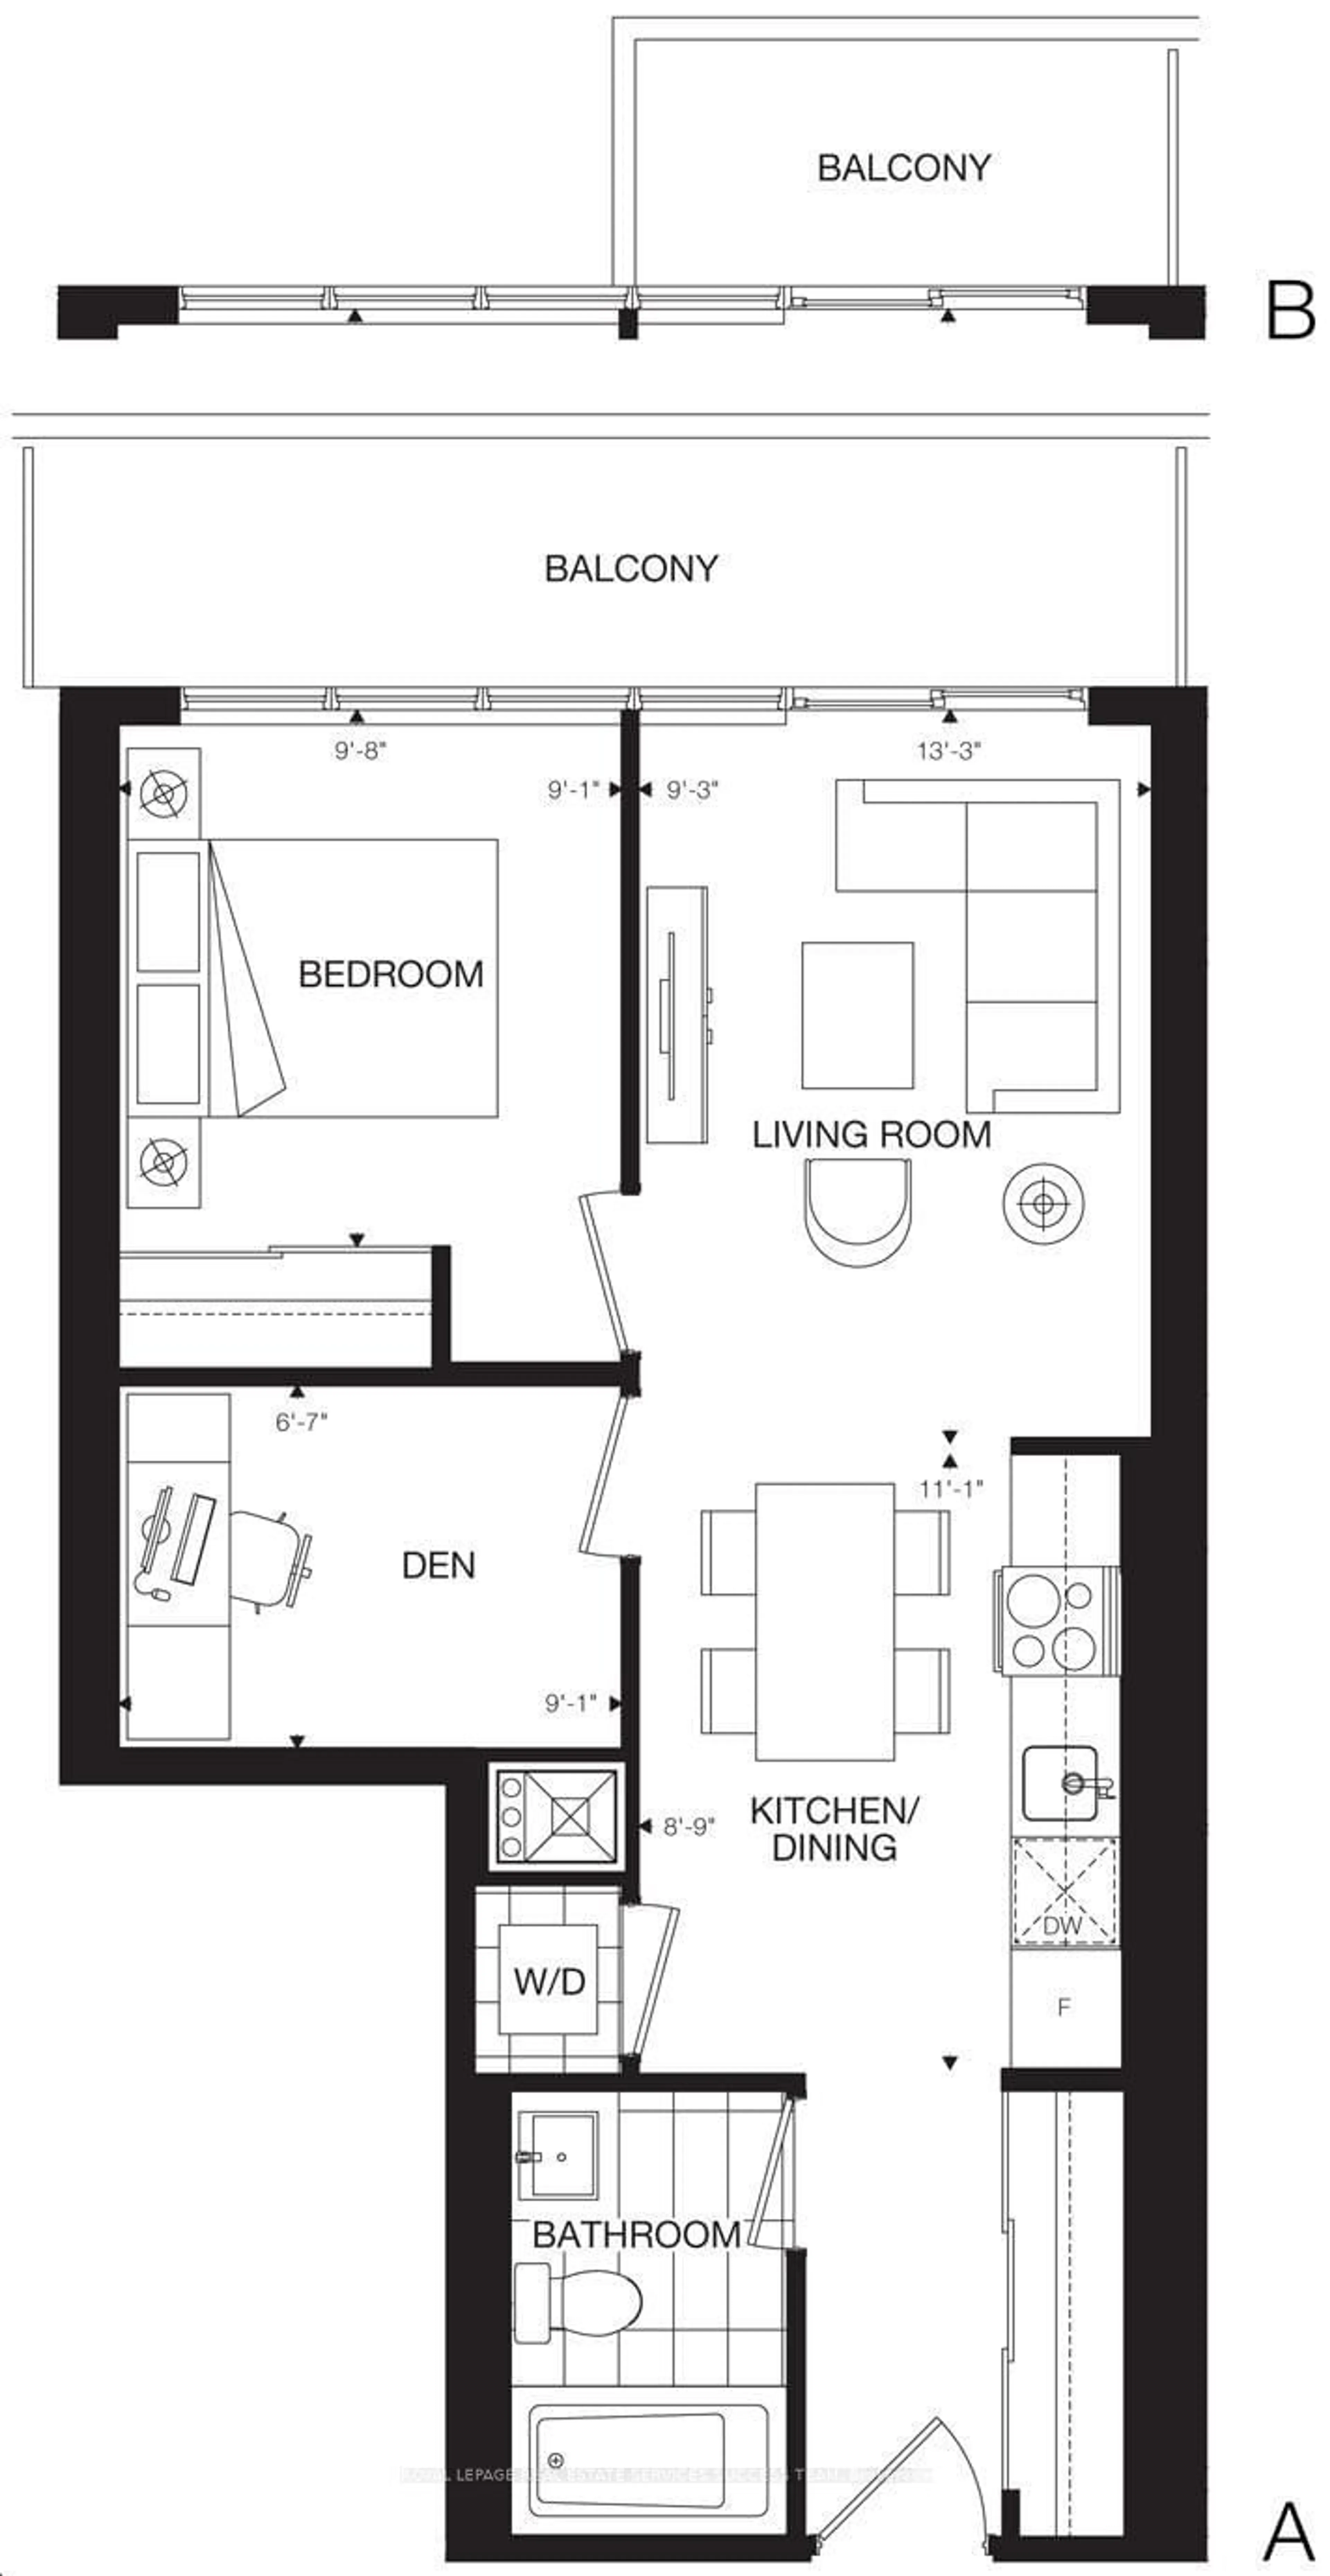 Floor plan for 365 Church St #3006, Toronto Ontario M5B 1Z9